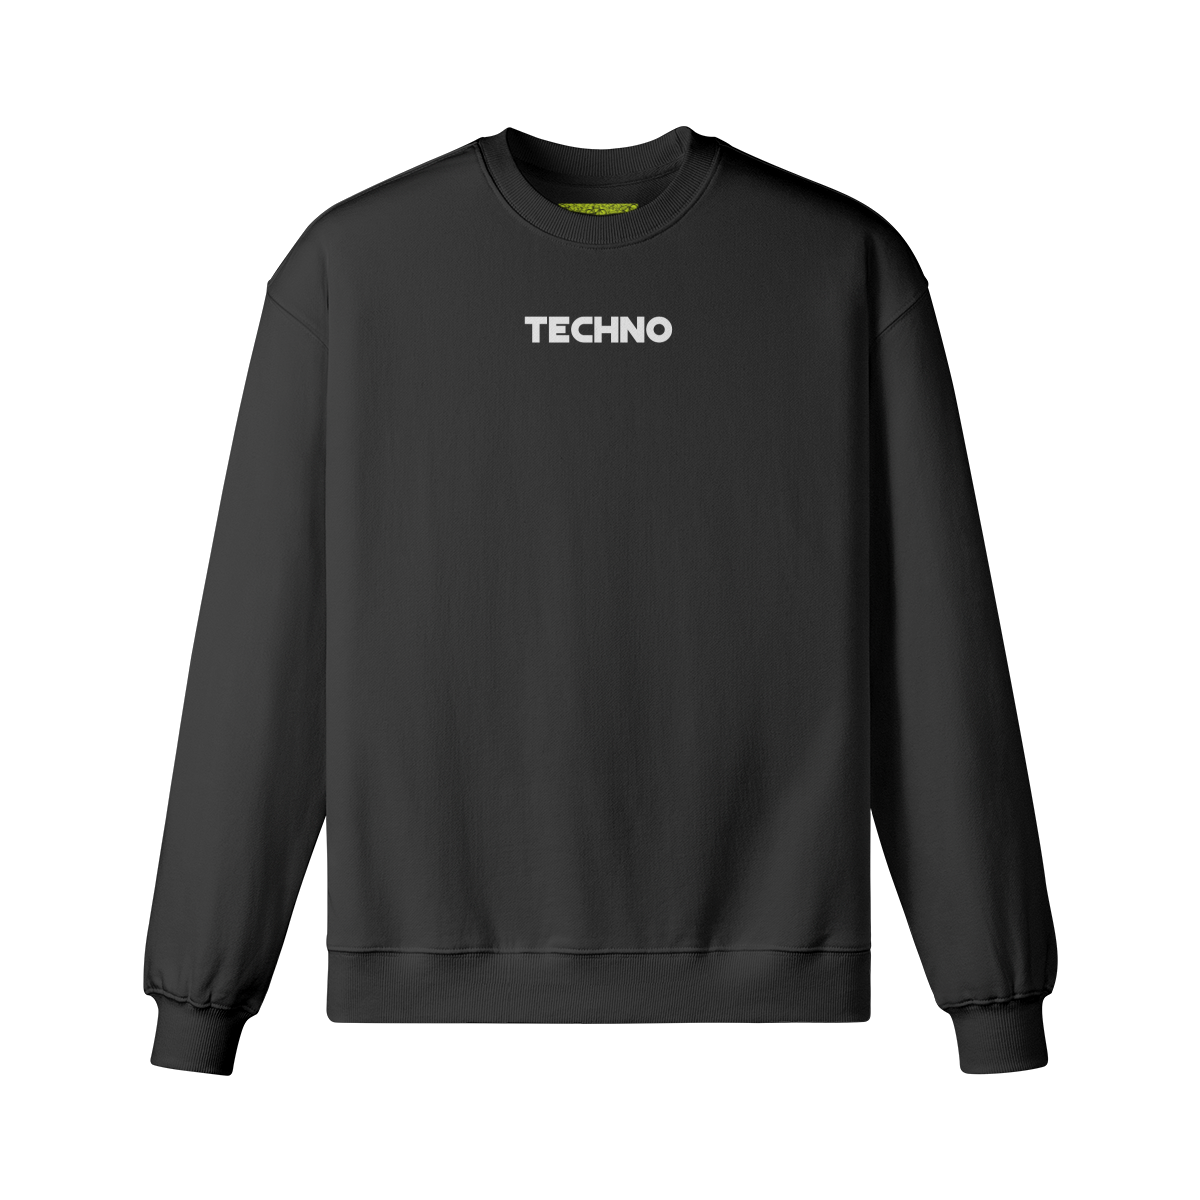 TECHNO - Unisex Oversized Sweatshirt